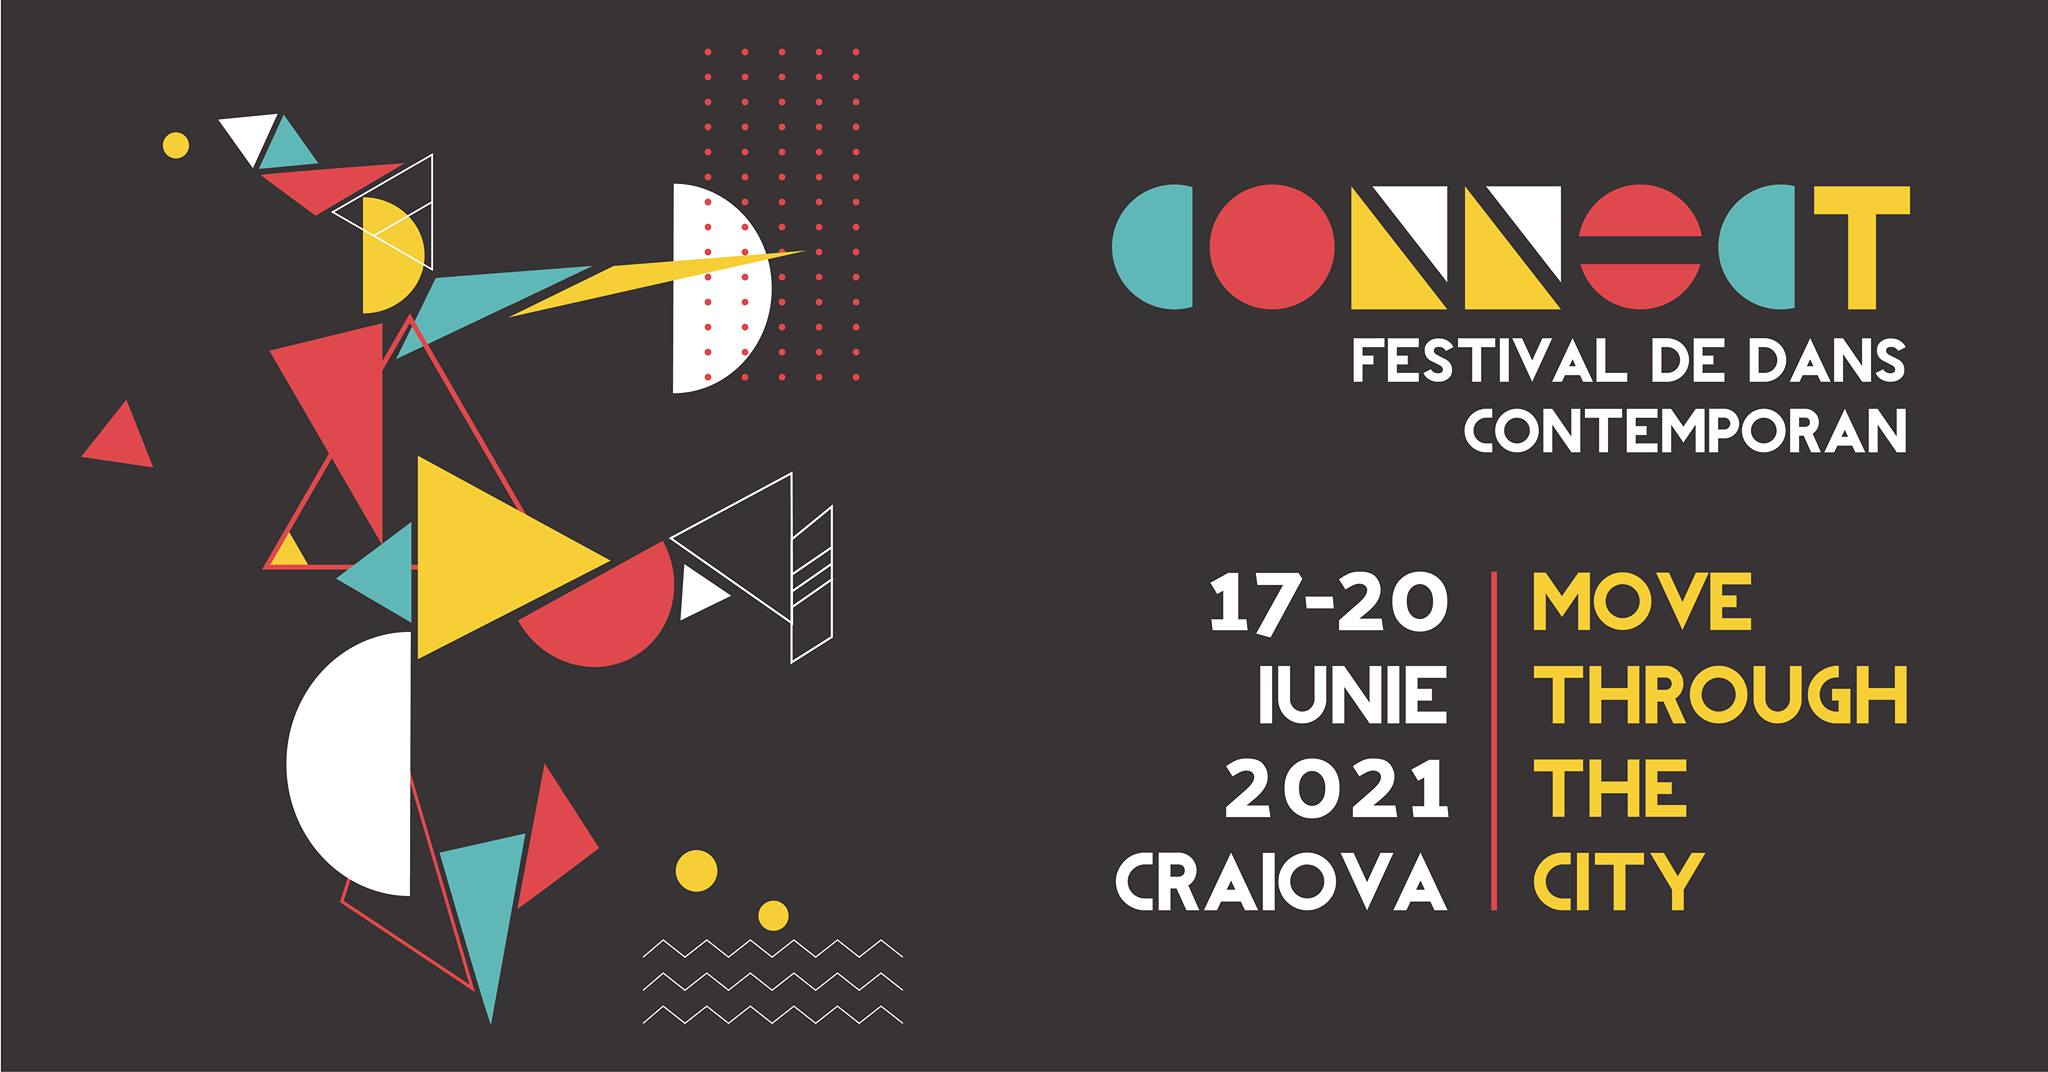 Festivalul de dans contemporan Connect | Craiova | 17-20 iunie